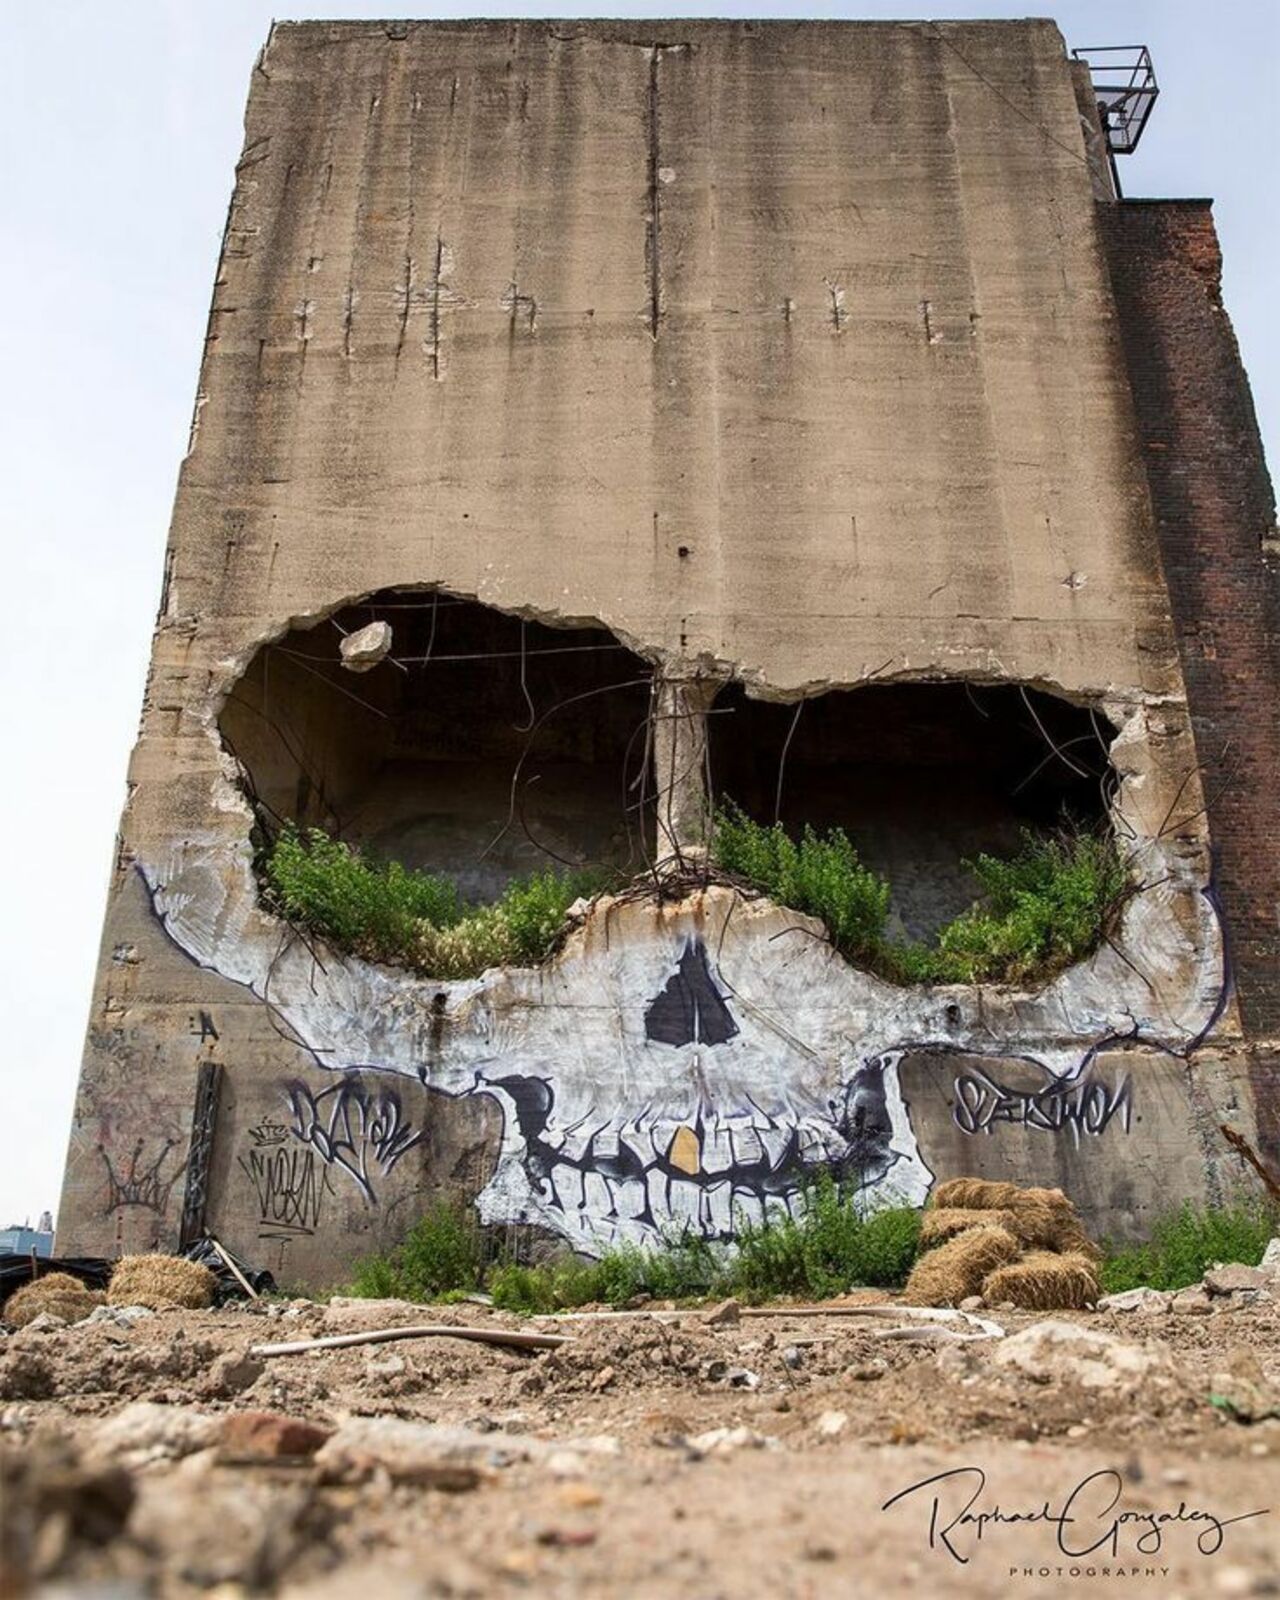 IDK the artist but this is dope af#streetart #mural #graffiti #art https://t.co/jC8m0WZUEr